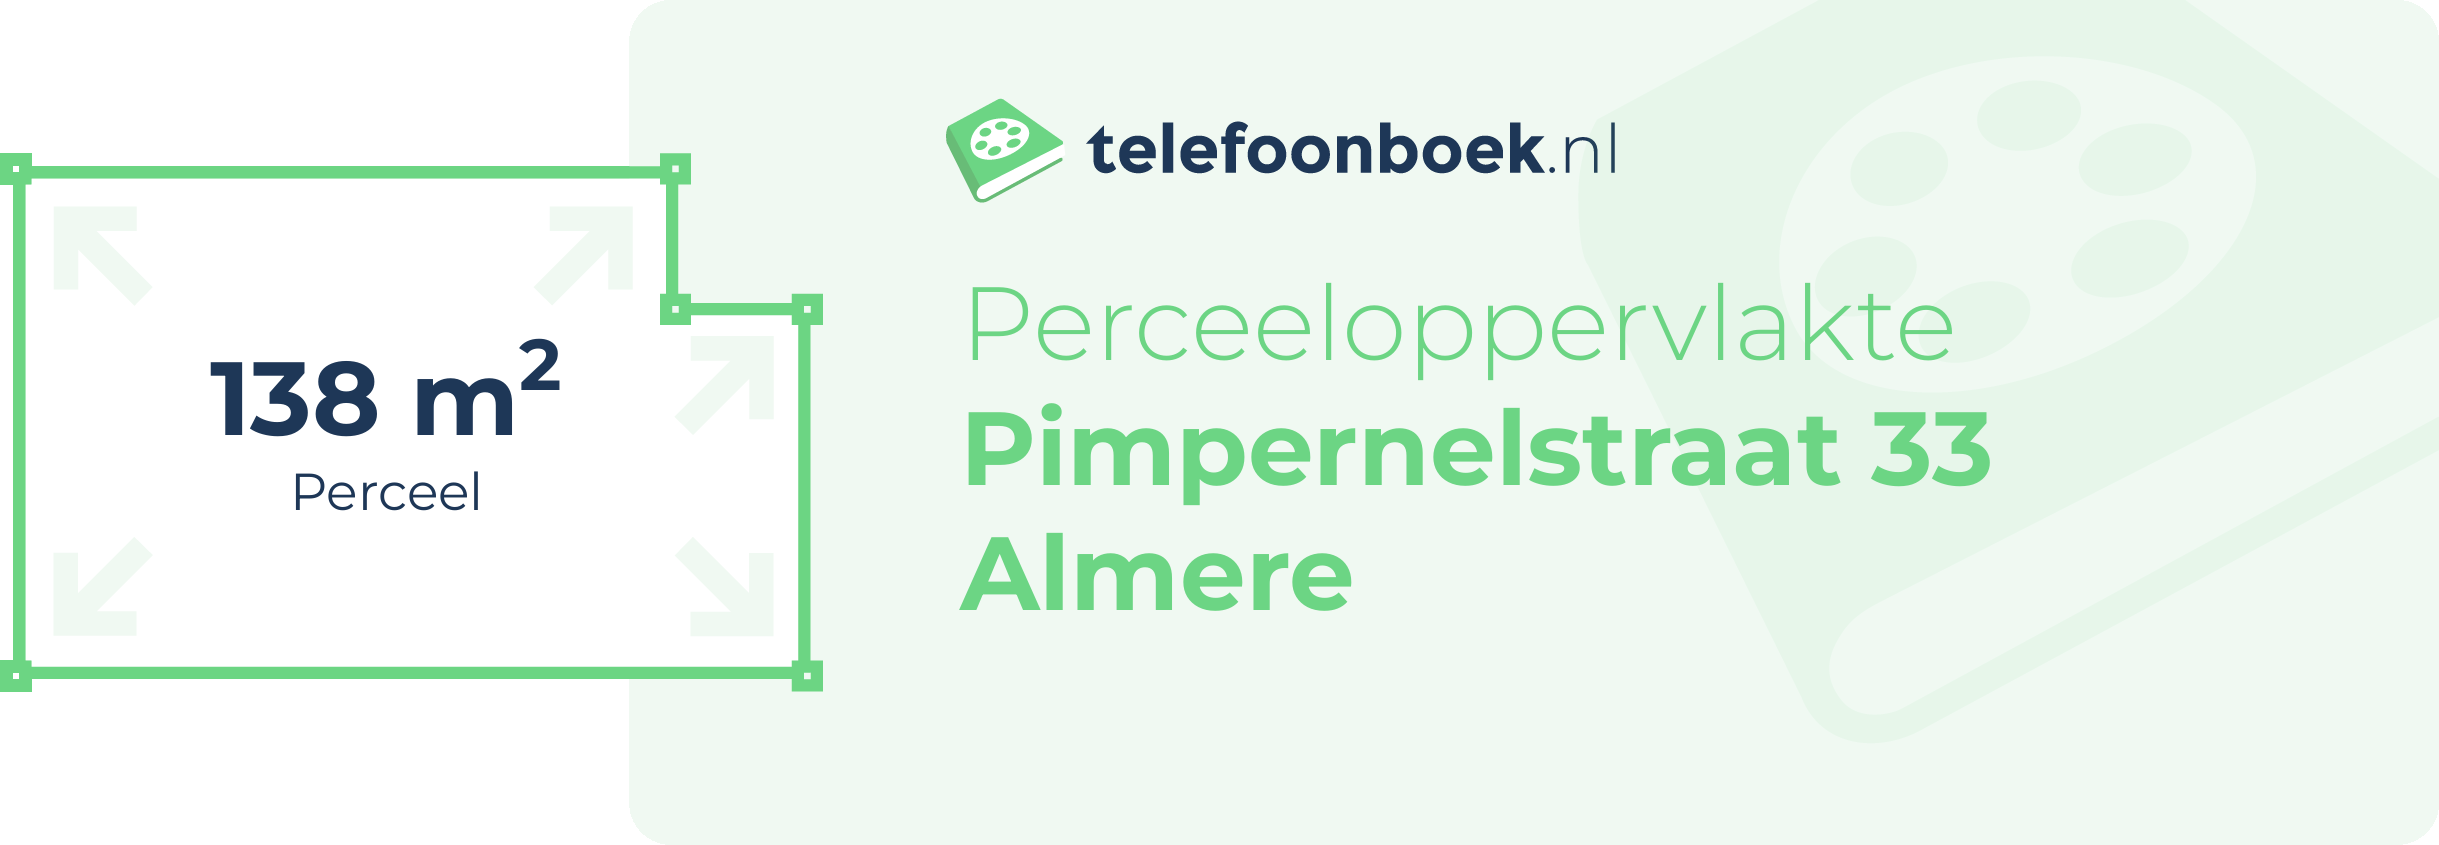 Perceeloppervlakte Pimpernelstraat 33 Almere